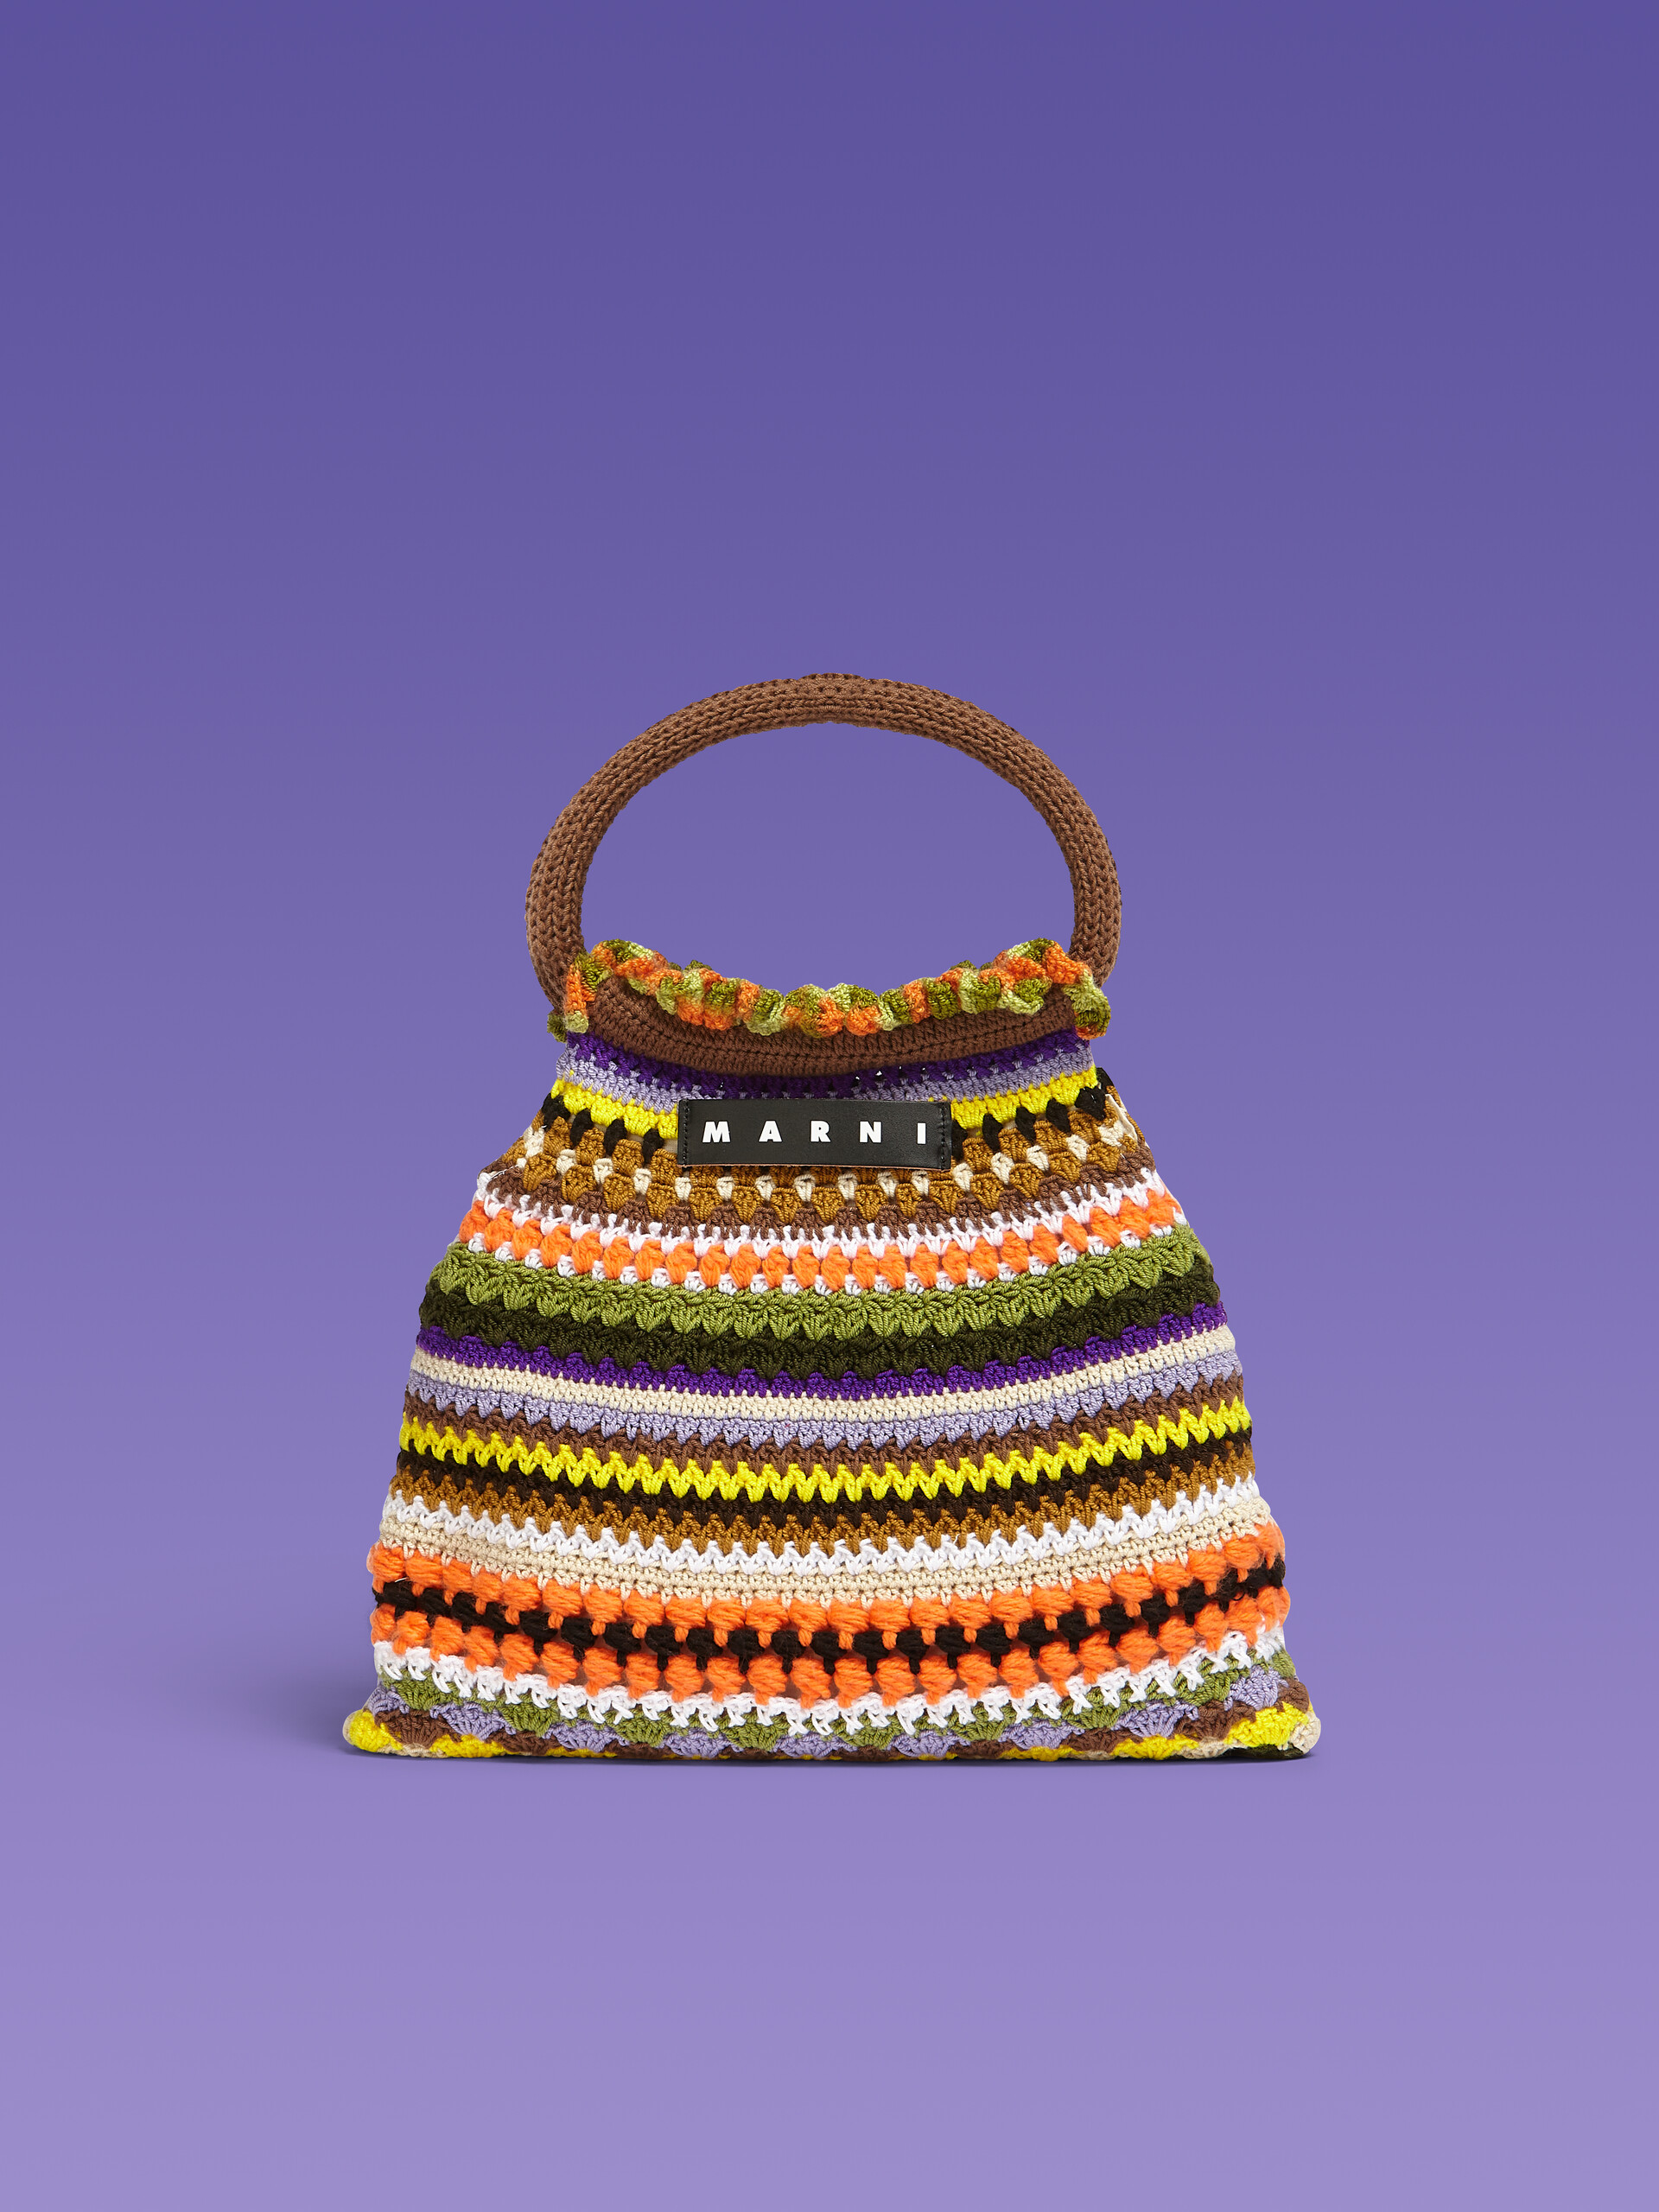 MARNI MARKET bag in brown crochet - Furniture - Image 1